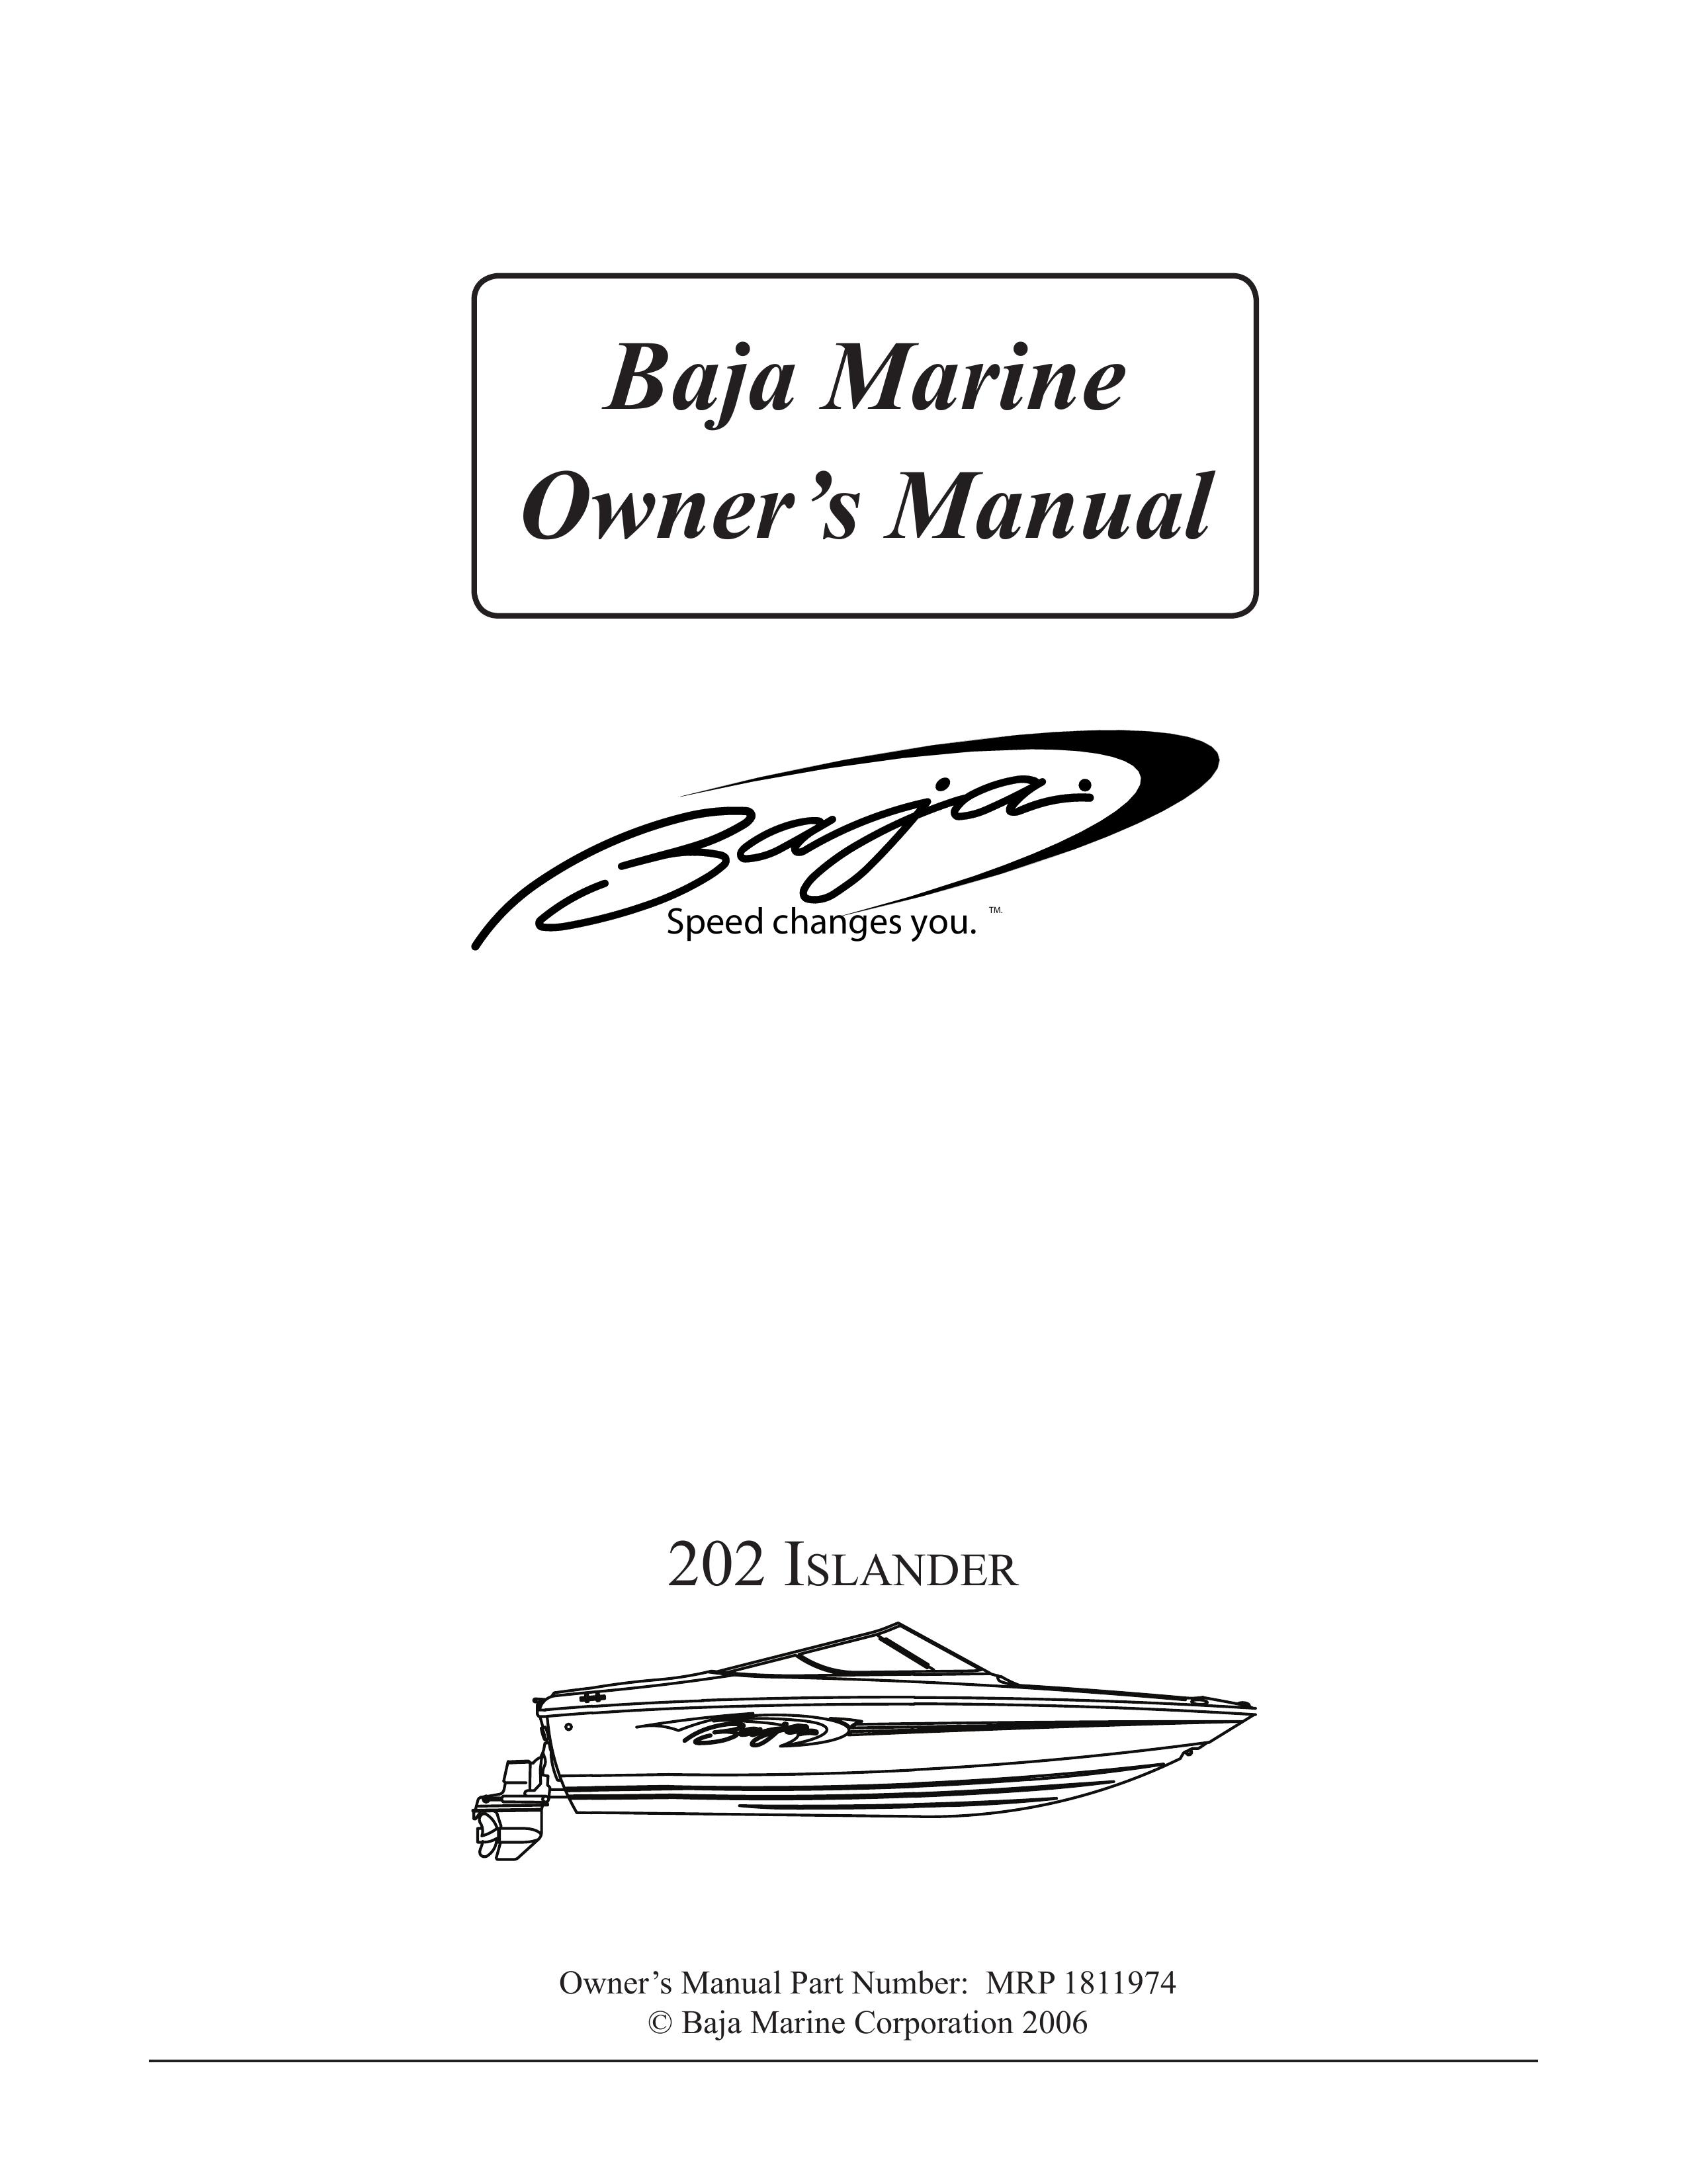 Baja Marine 202 Islander Boat User Manual (Page 1)